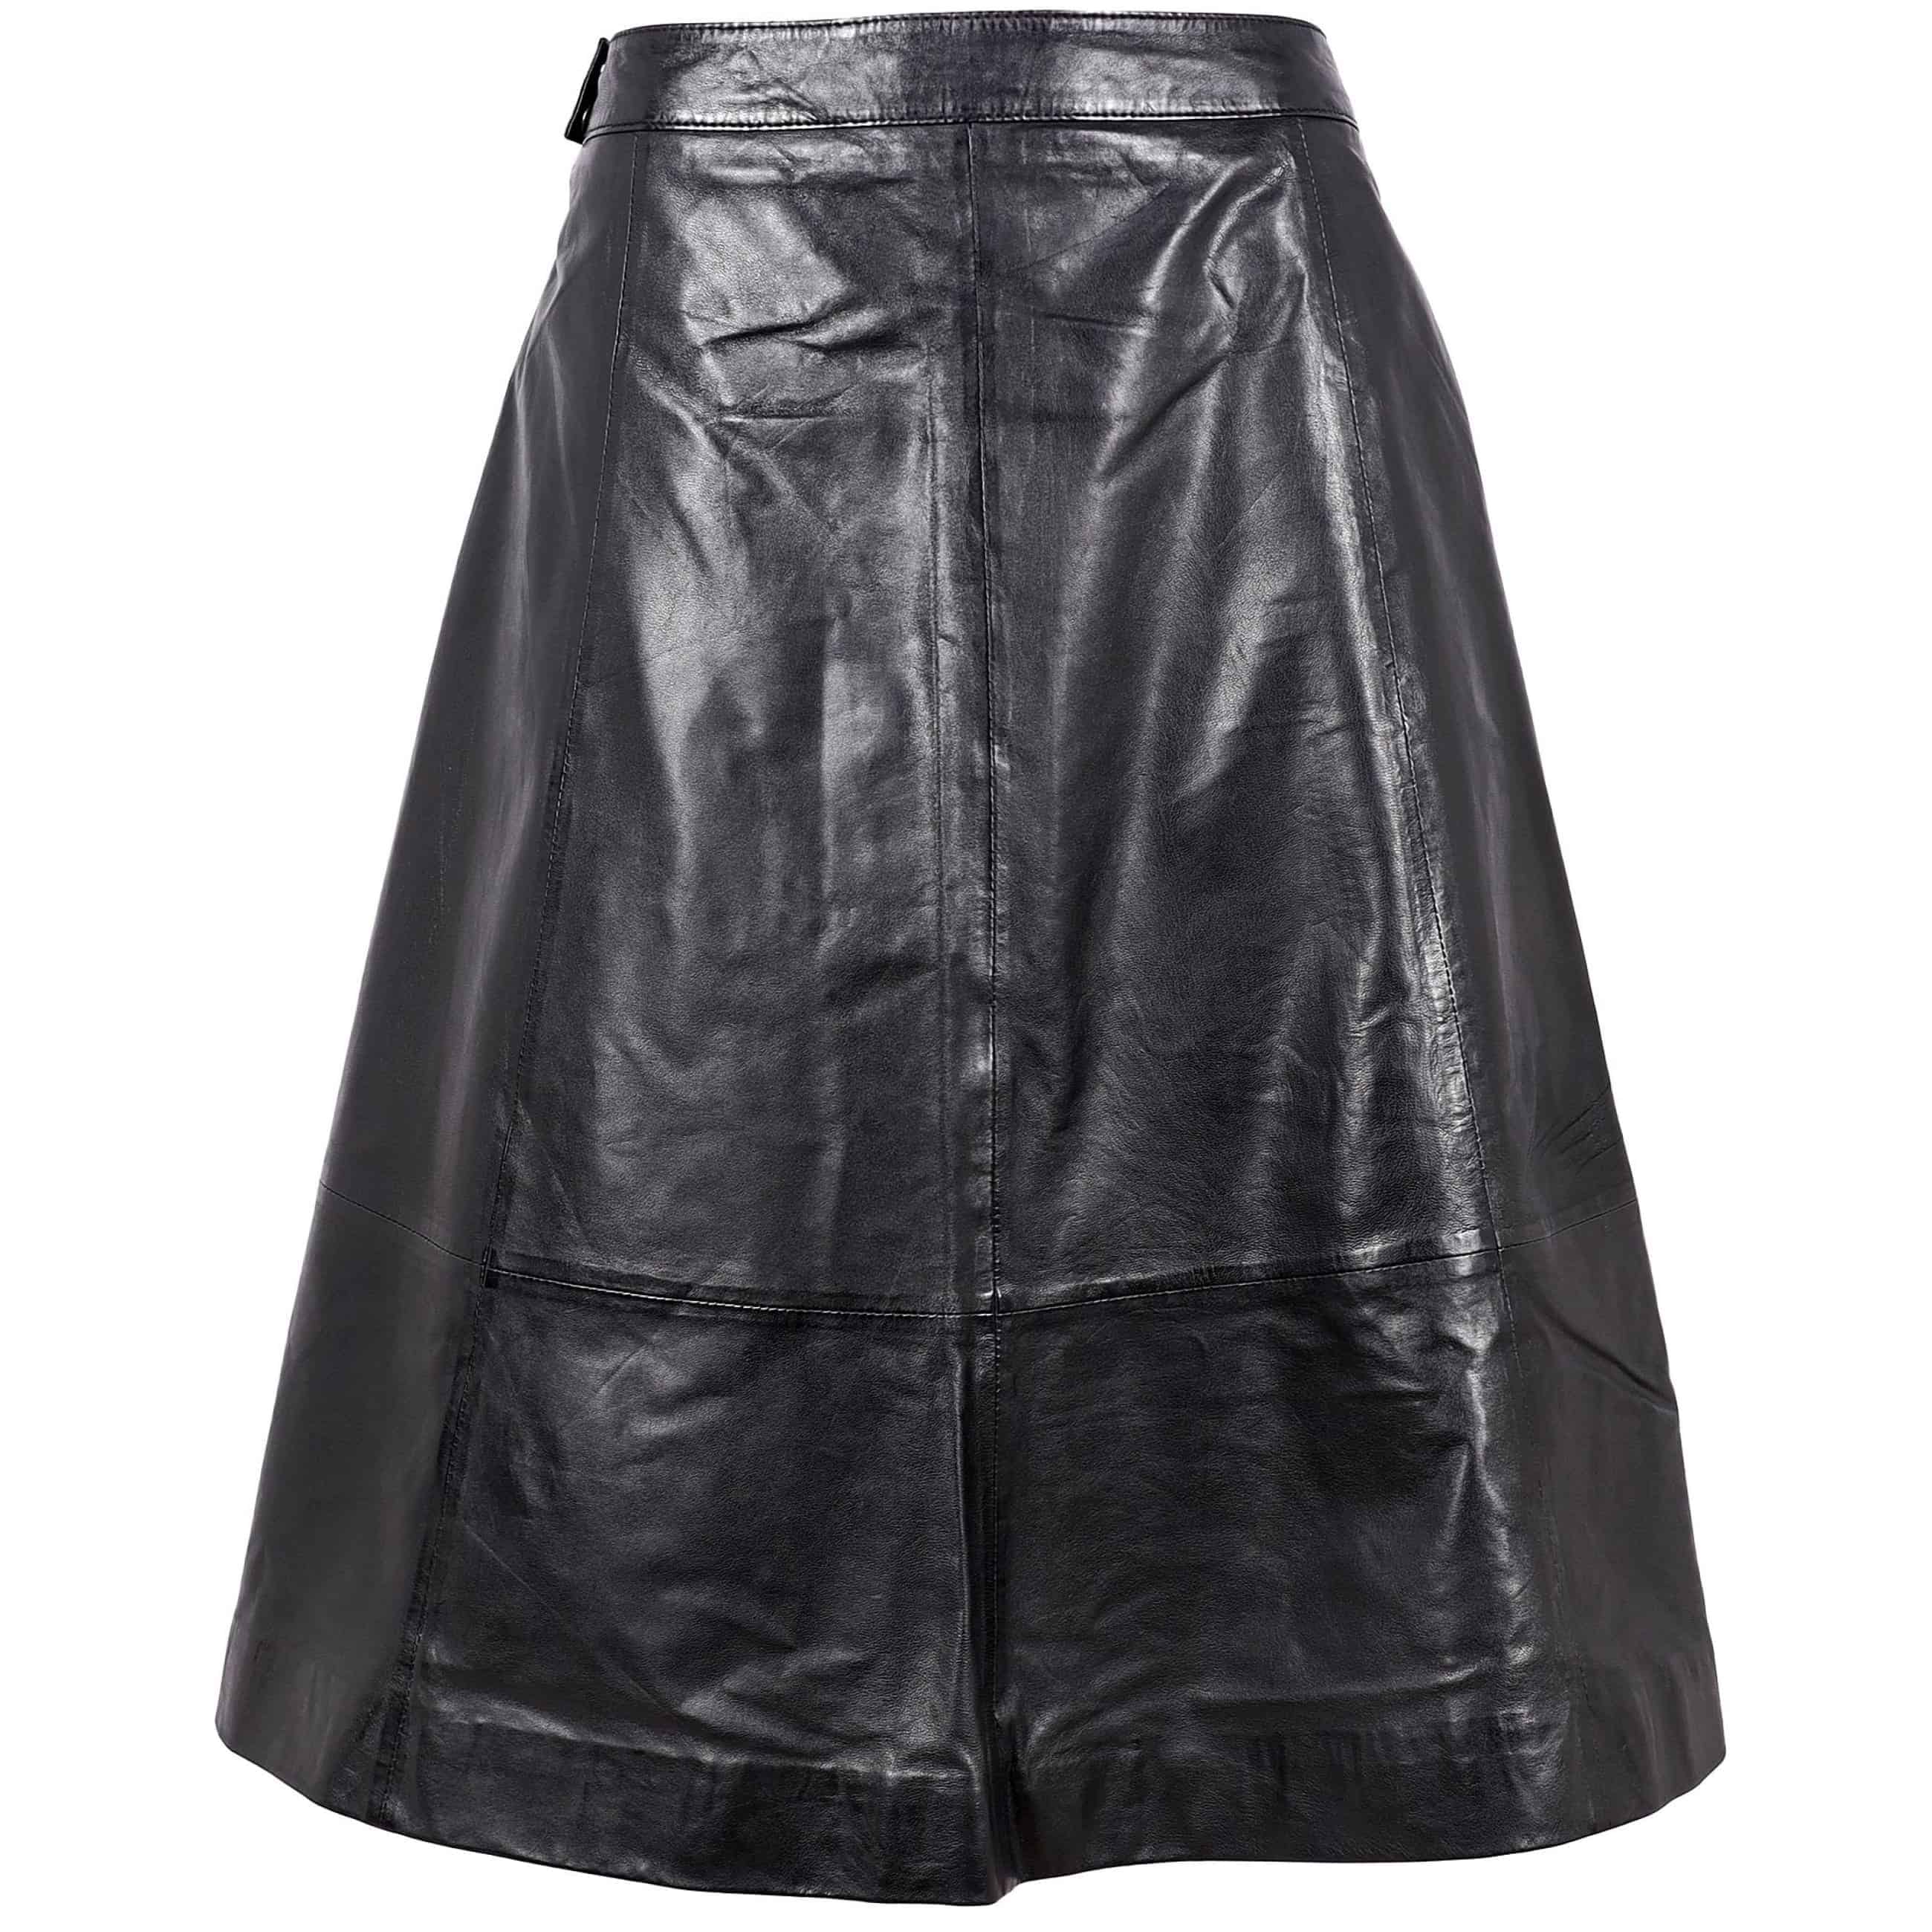 Mauritius Zaza Leather Skirt in Black 